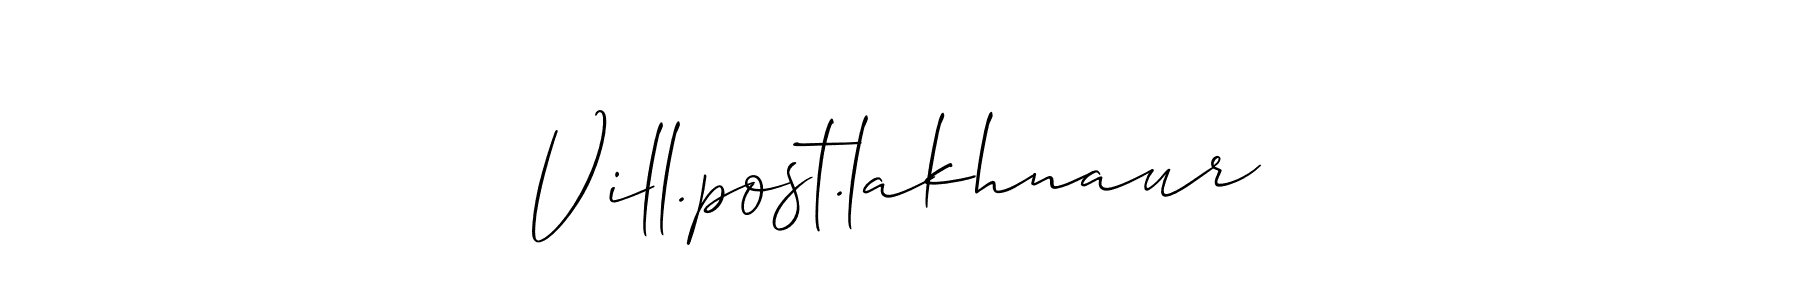 How to make Vill.post.lakhnaur signature? Allison_Script is a professional autograph style. Create handwritten signature for Vill.post.lakhnaur name. Vill.post.lakhnaur signature style 2 images and pictures png